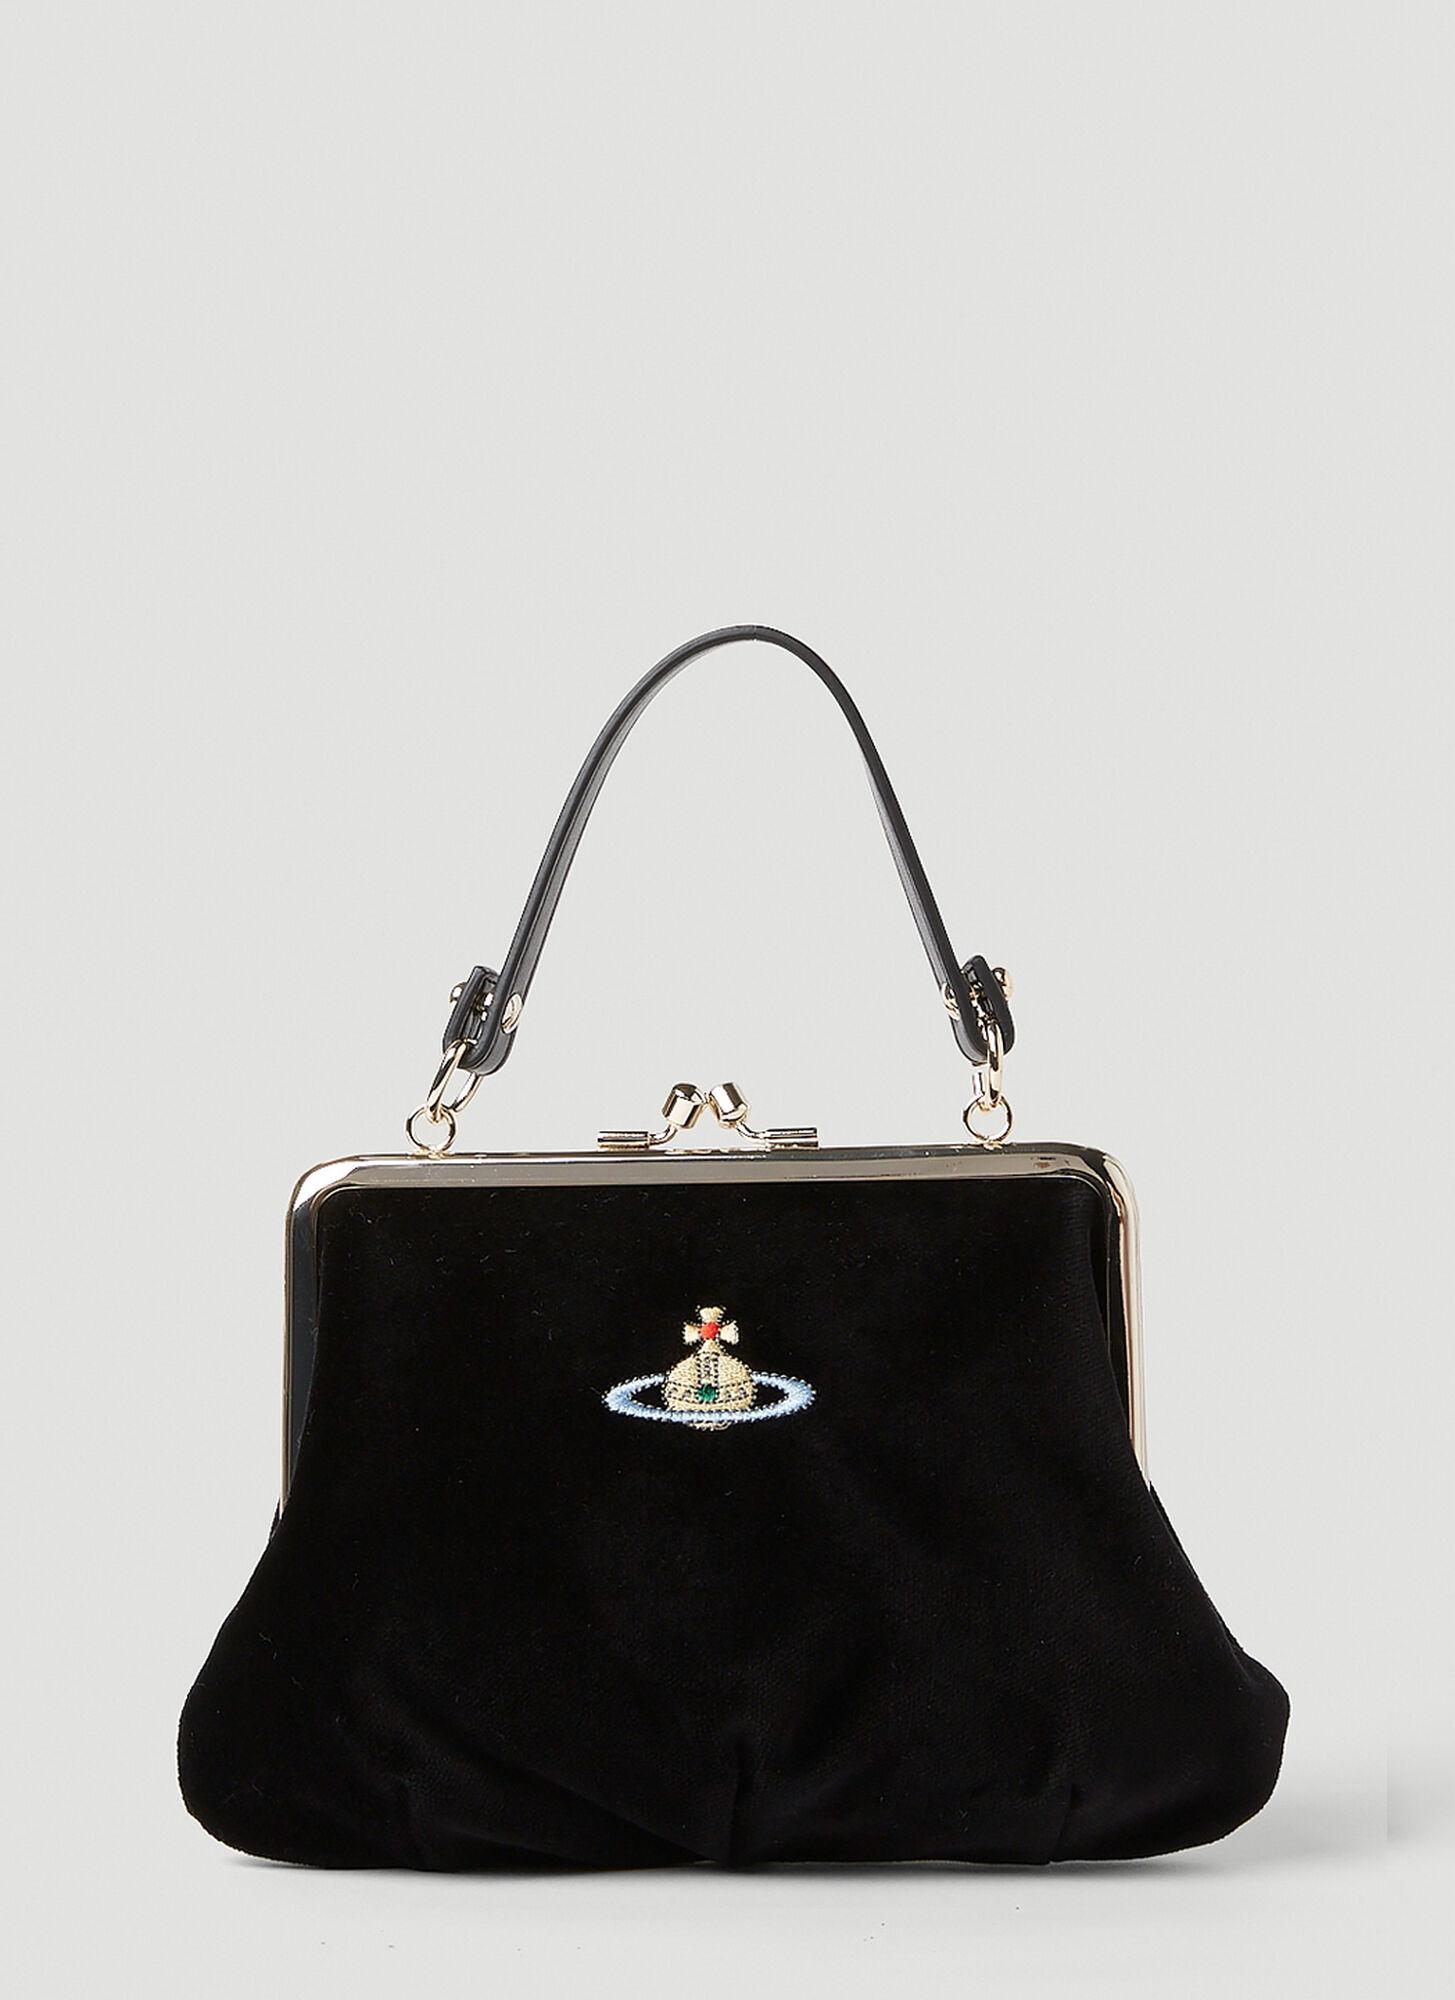 Vivienne Westwood Granny Frame Handbag in Black | Lyst